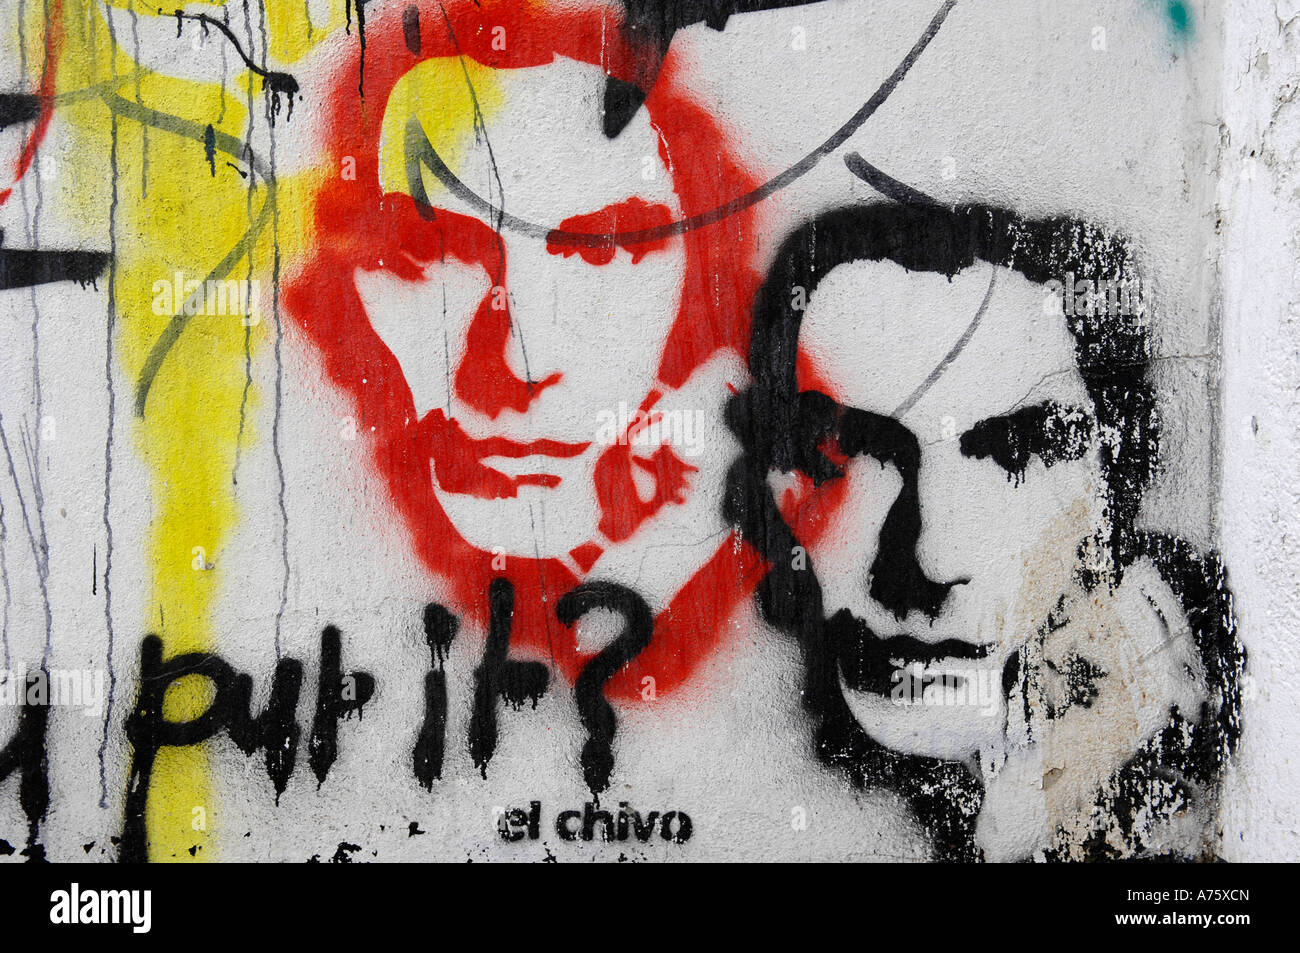 El Chivo Graffiti Art Style Banksy Banque D'Images